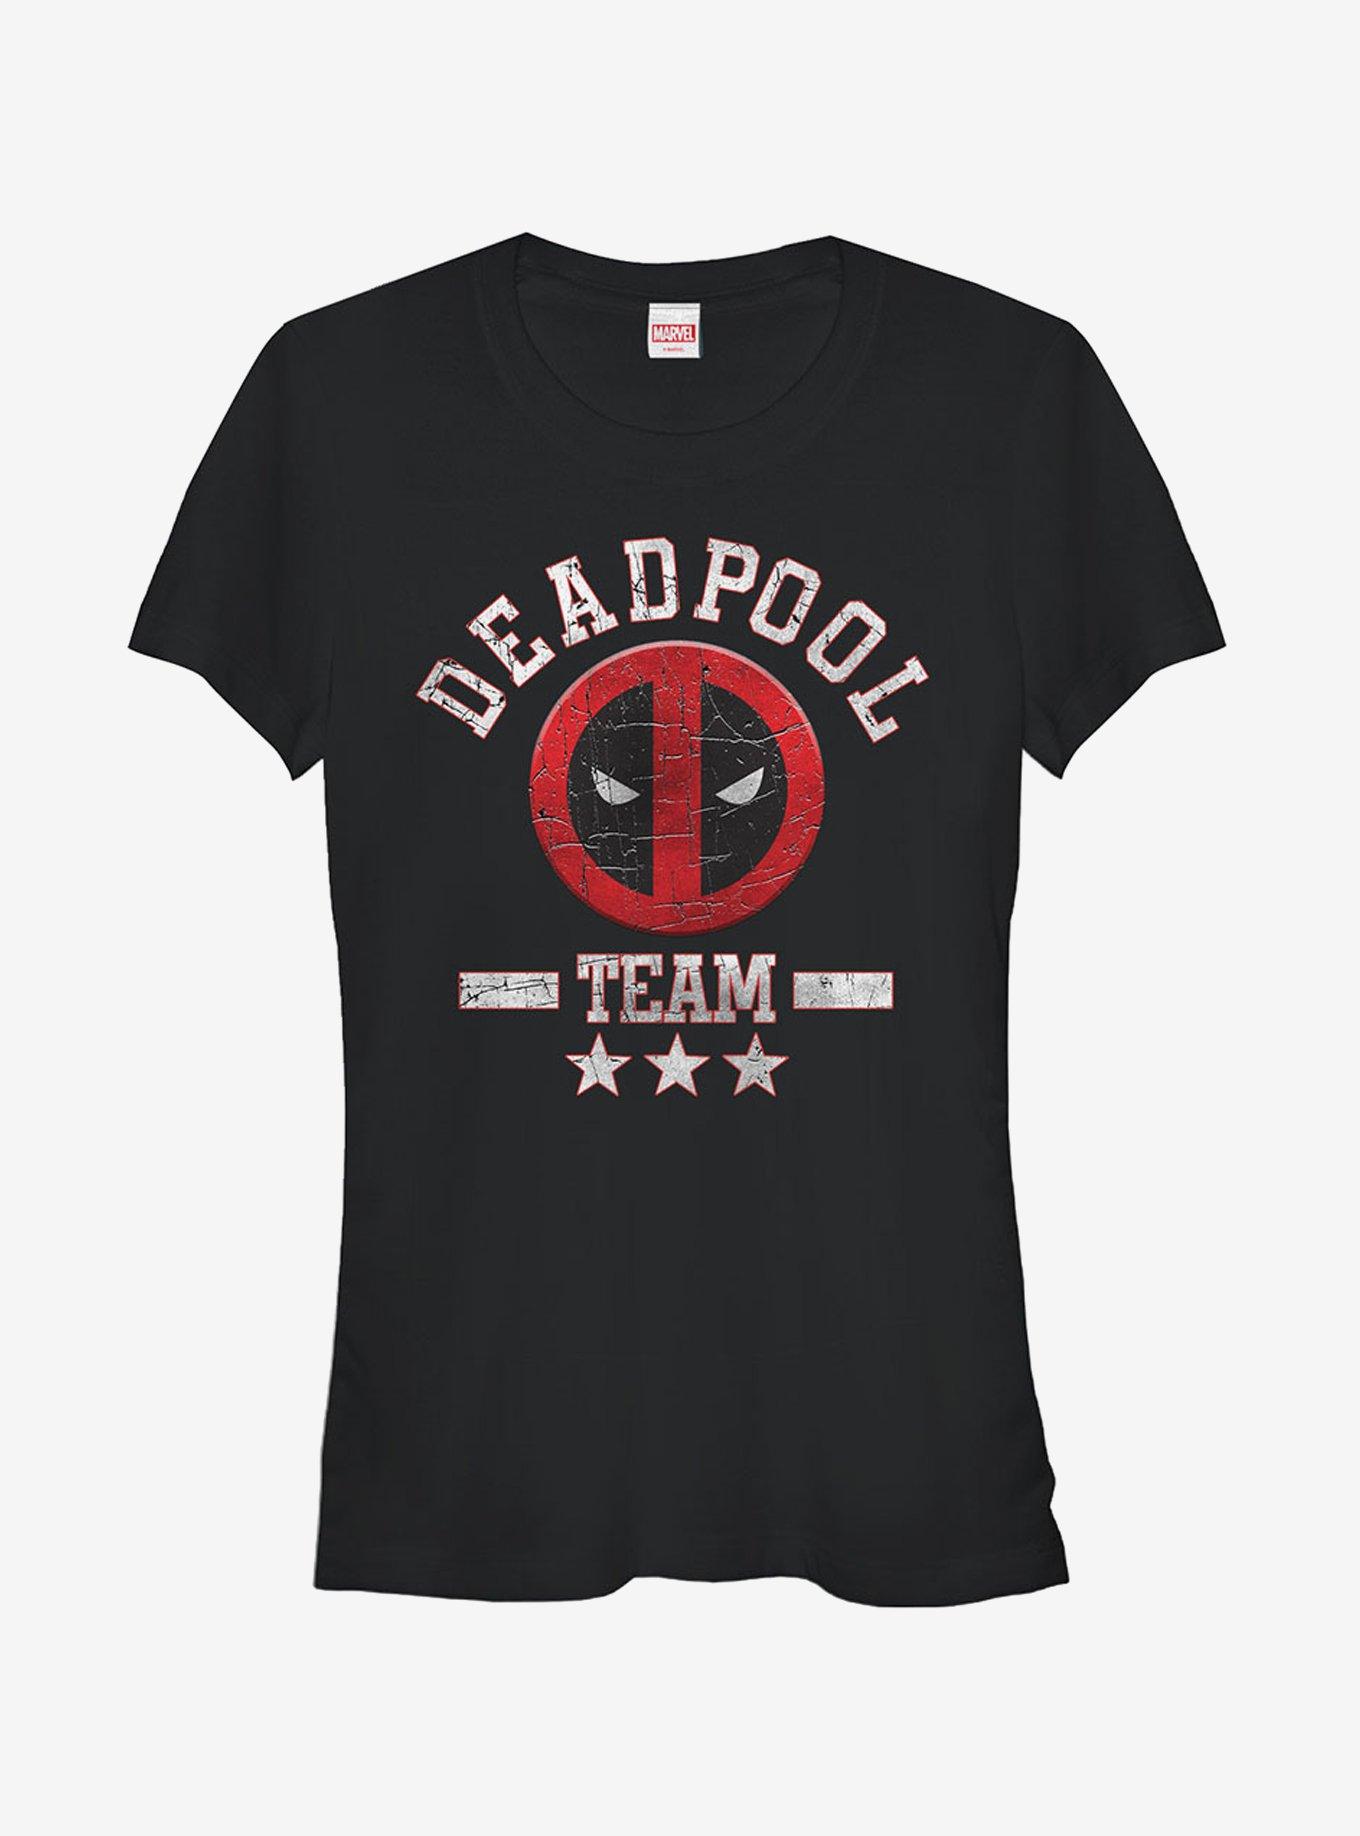 Marvel Deadpool Cracked Team Logo Girls T-Shirt, , hi-res